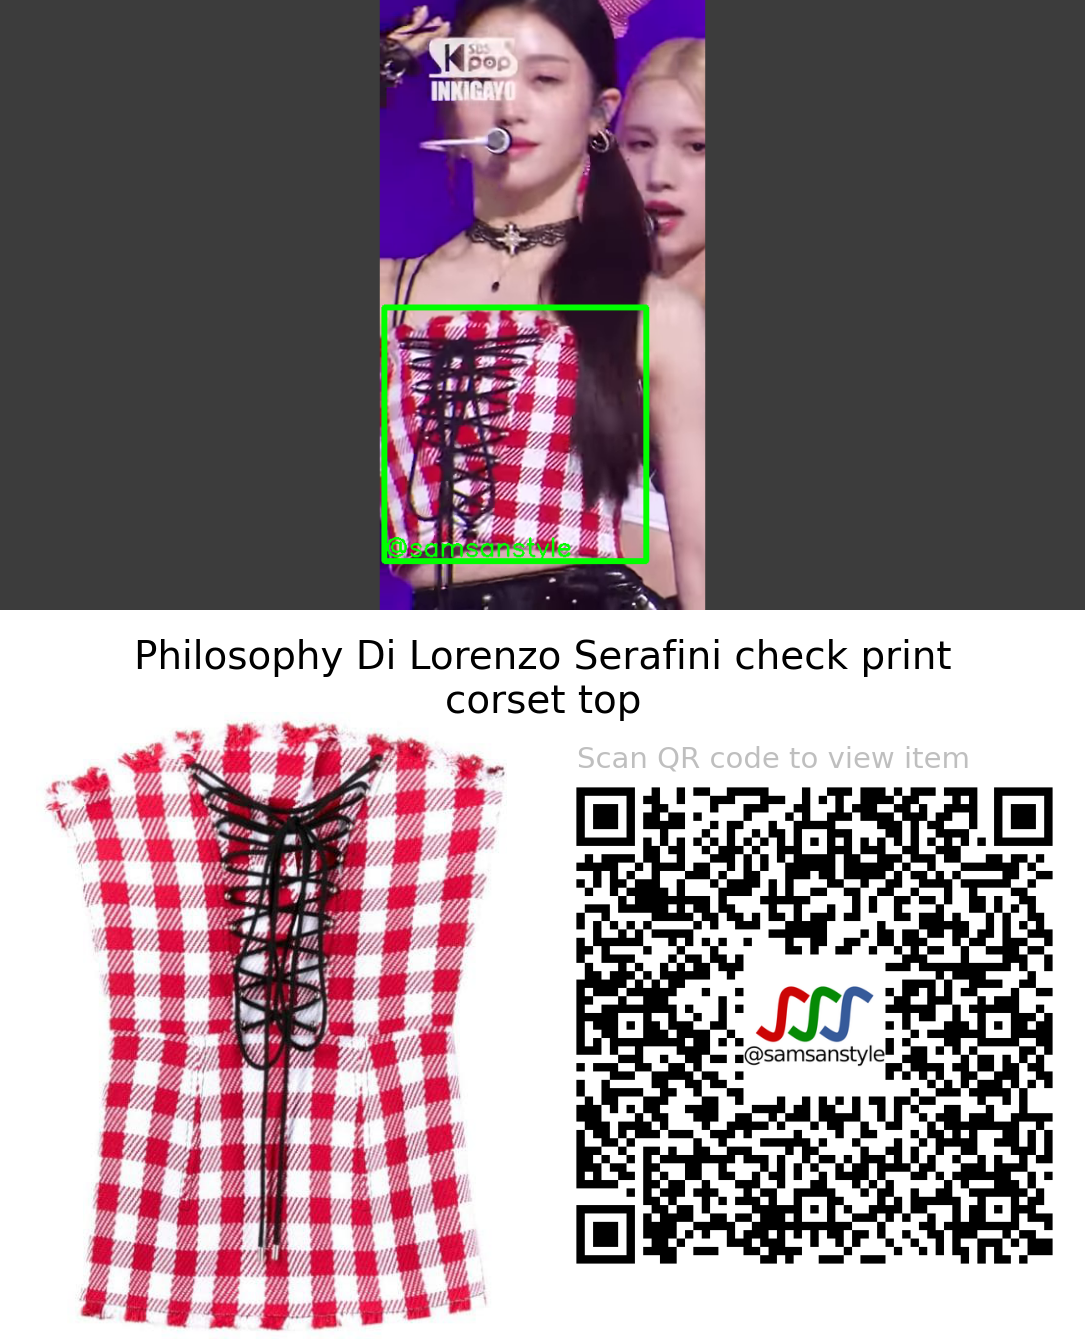 Kep1er Xiaoting | WA DA DA SBS Inkigayo | Philosophy Di Lorenzo Serafini check print corset top